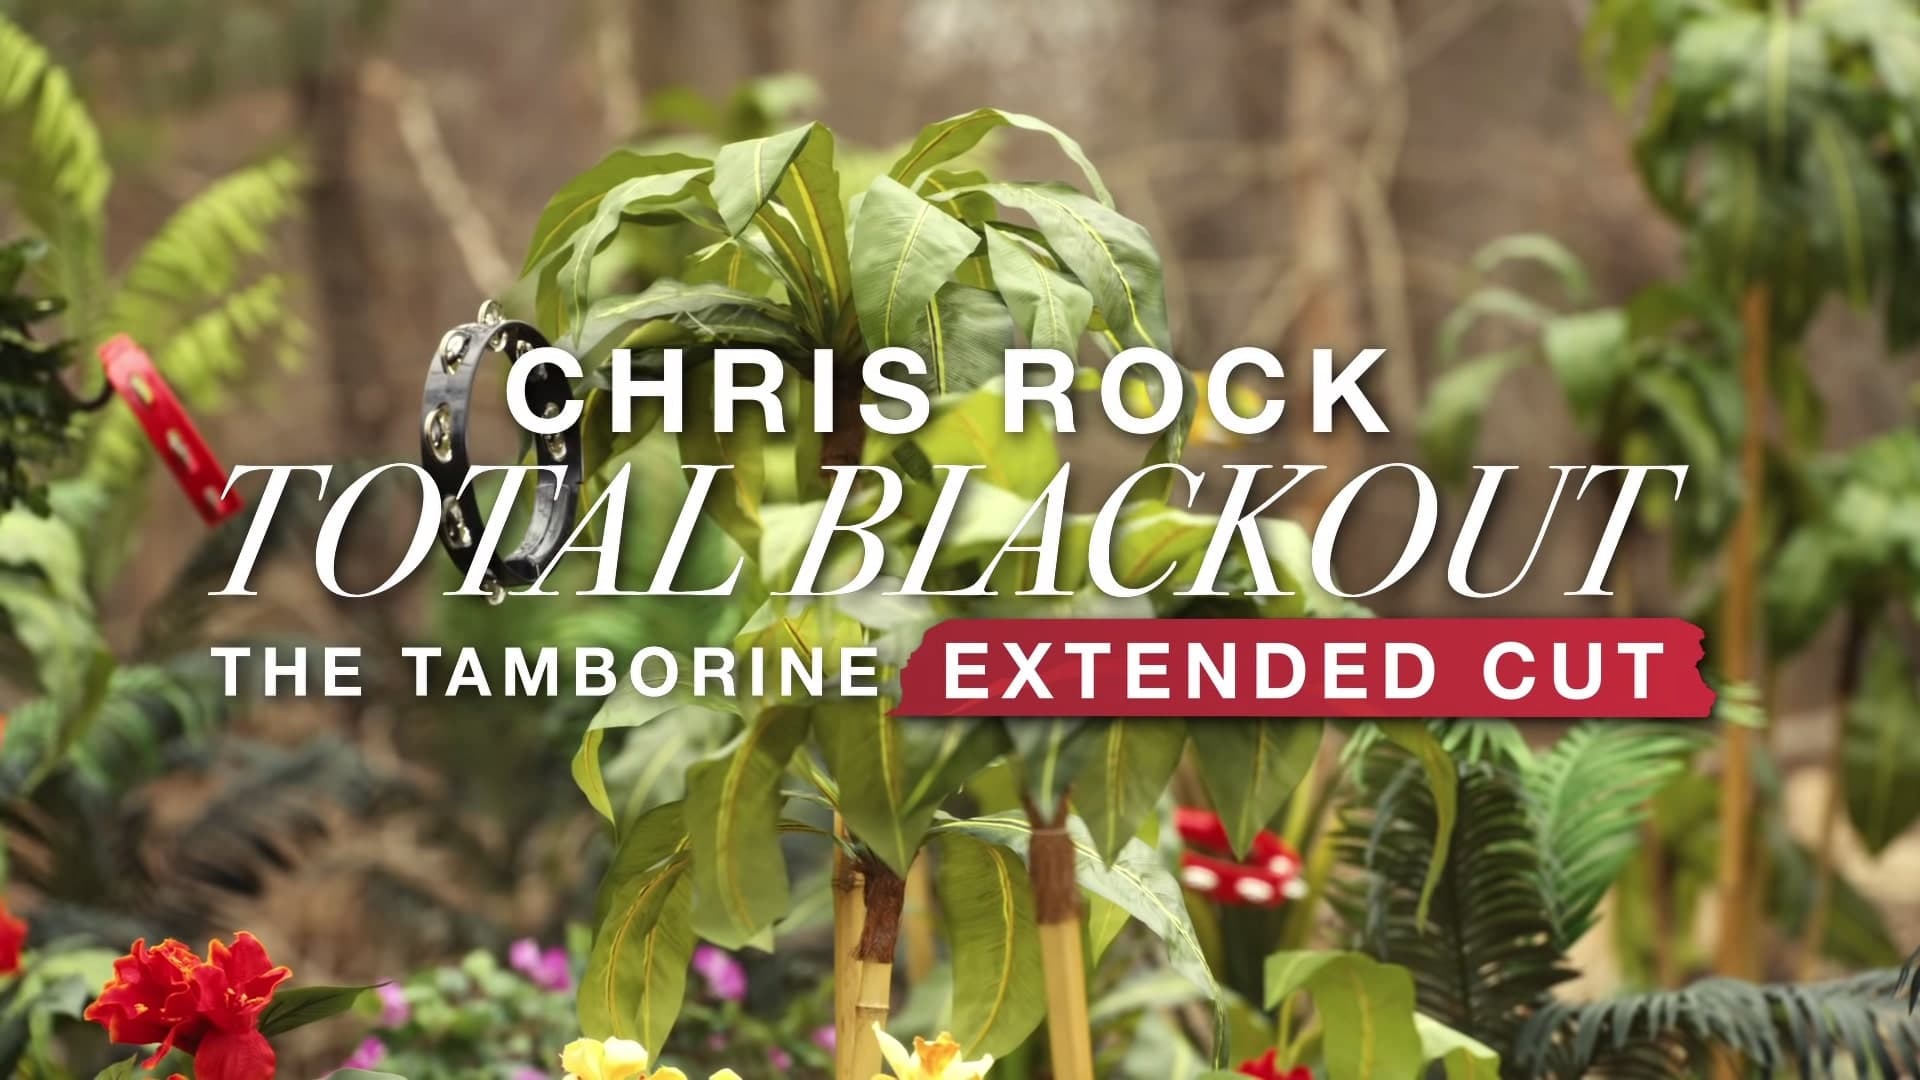 Netflix Chris Rock Total Blackout The Tamborine Extended Cut Trailer, Netflix Comedy, Netflix Standup Comedy, Coming to Netflix in January 2021